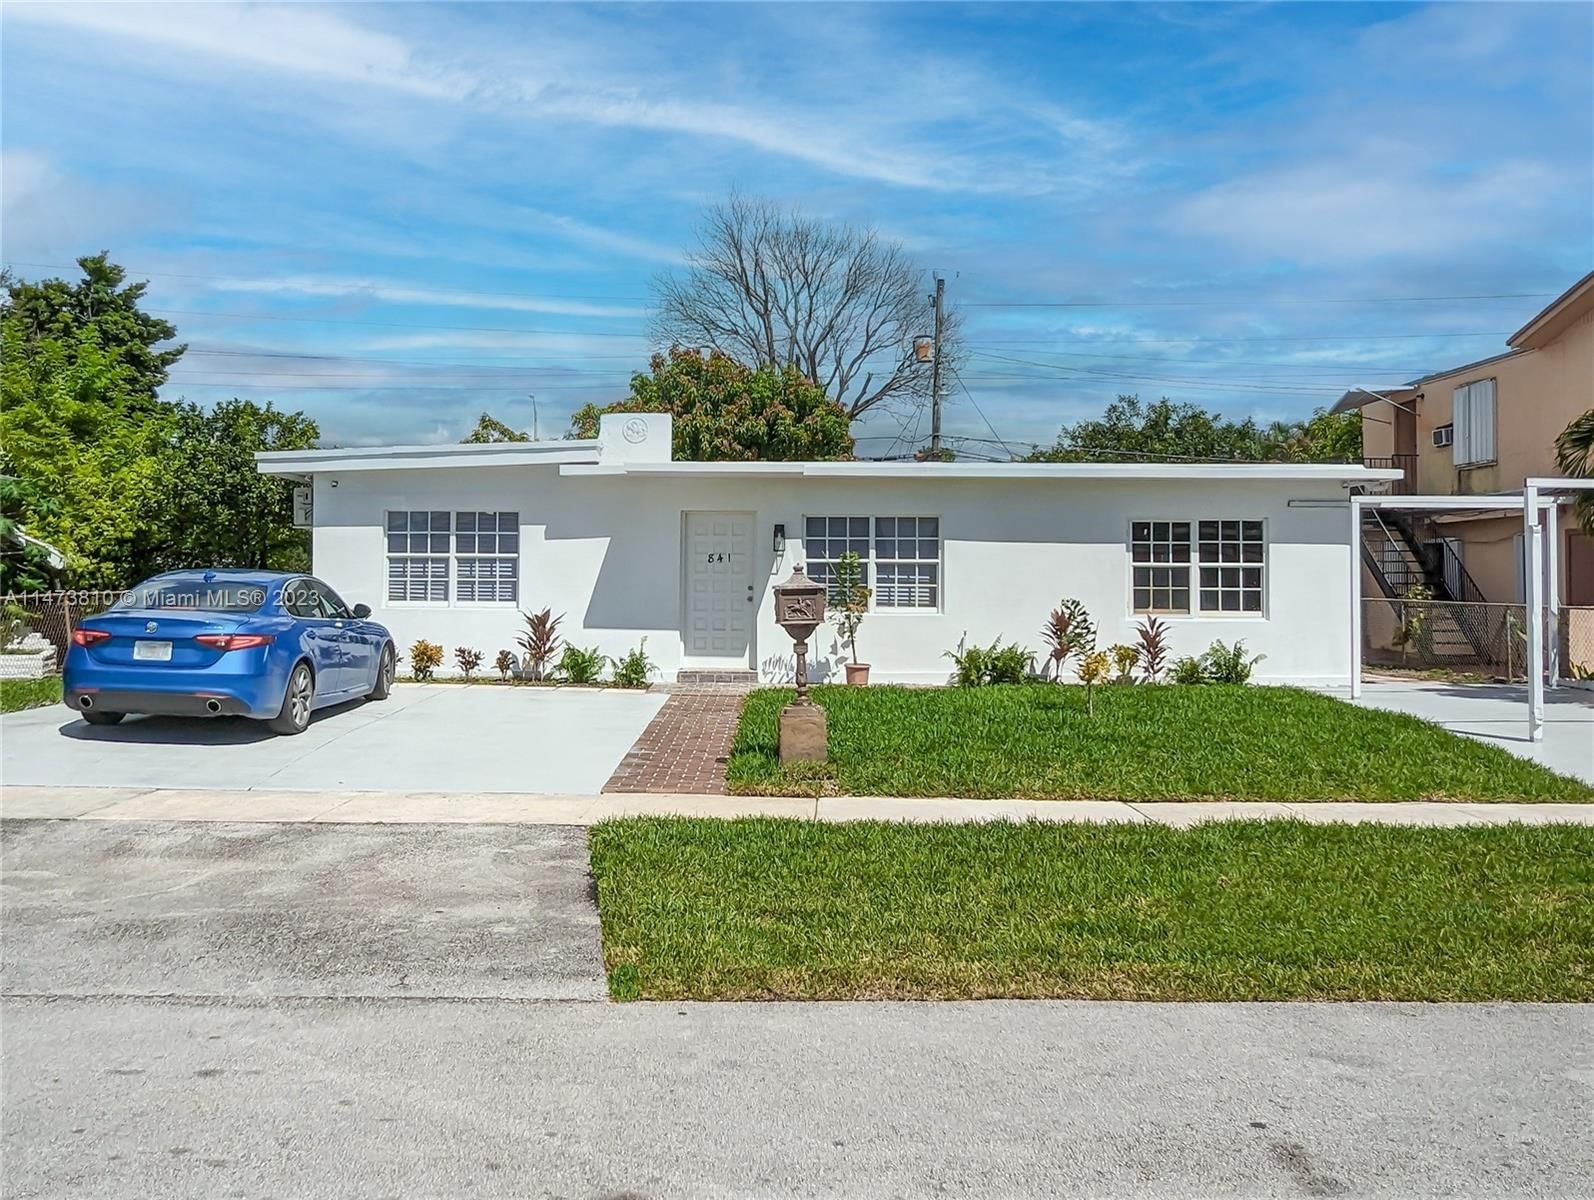 Real estate property located at 841 16th Pl, Miami-Dade County, SUN-TAN VILLAGE SEC 2, Hialeah, FL